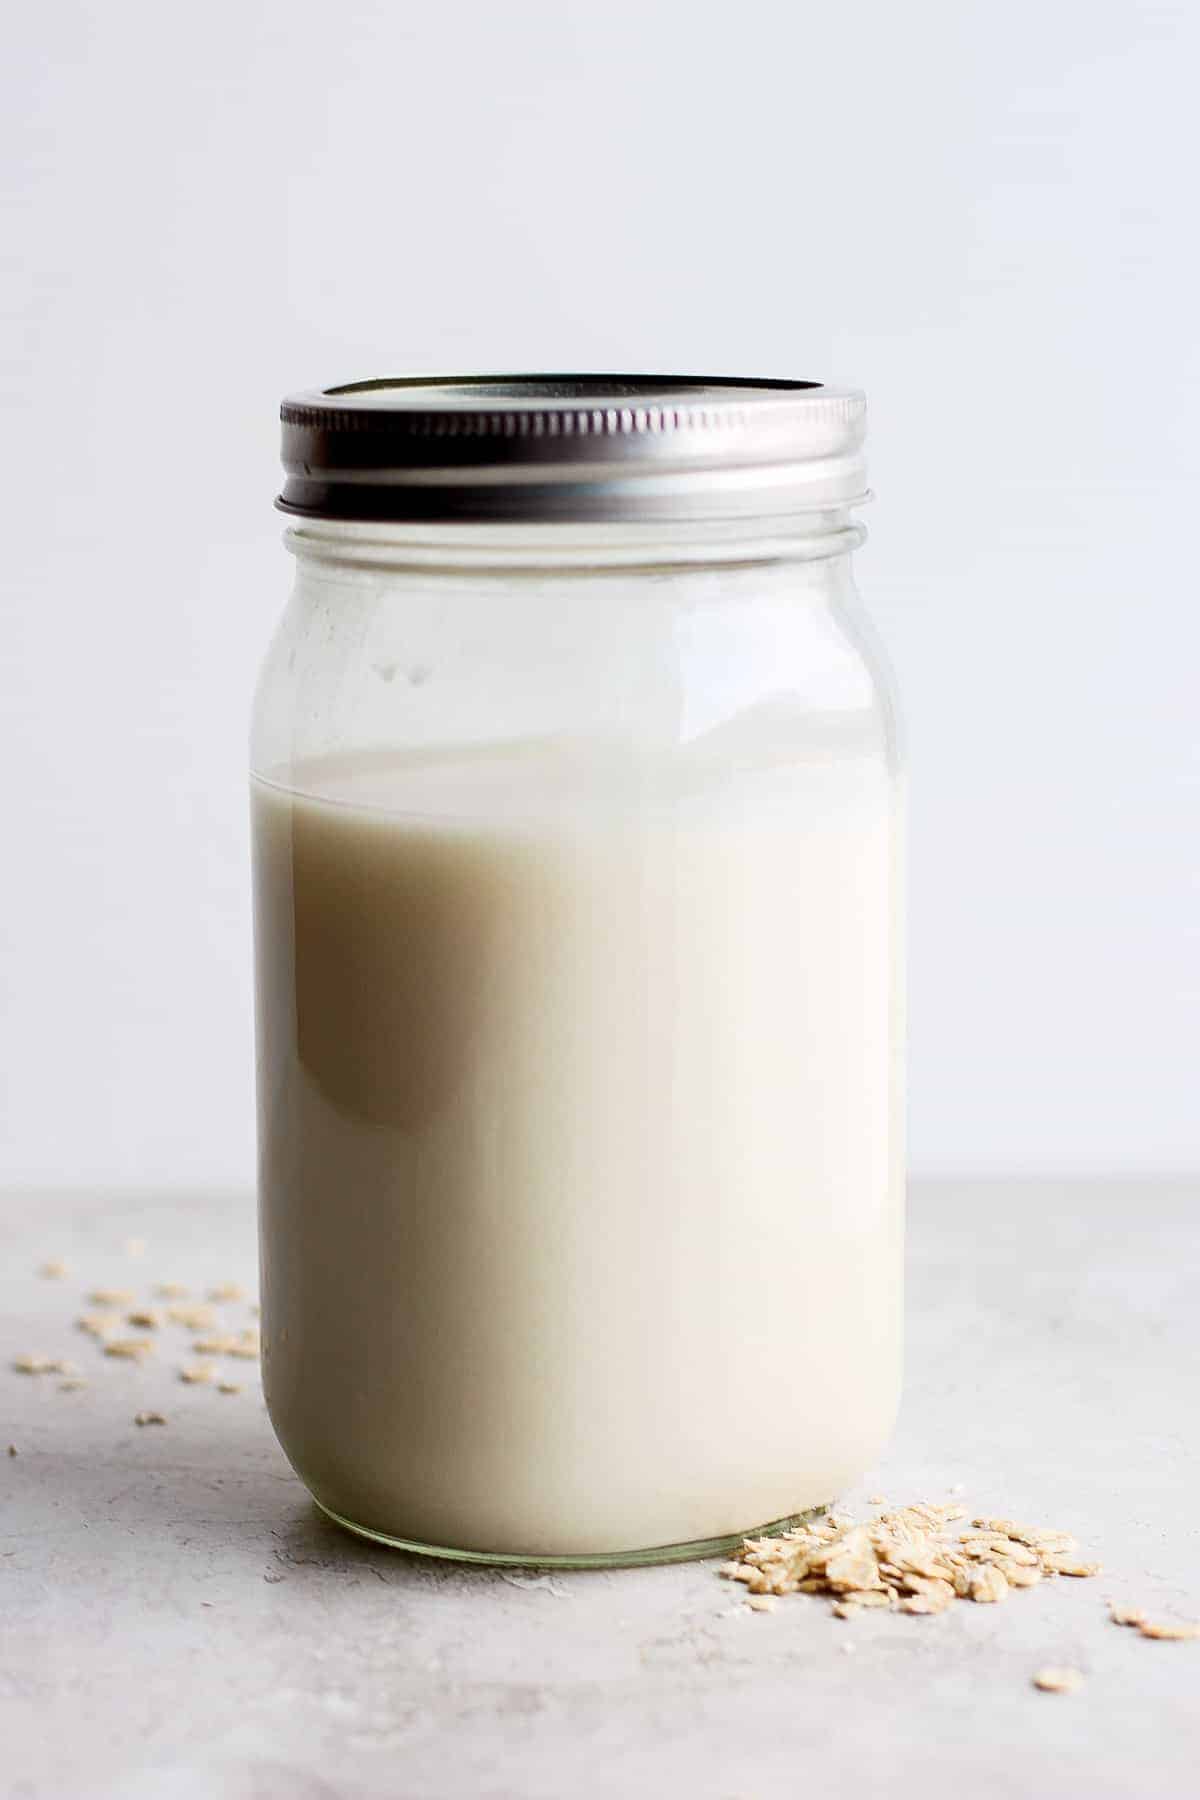 Homemade oat milk in a mason jar